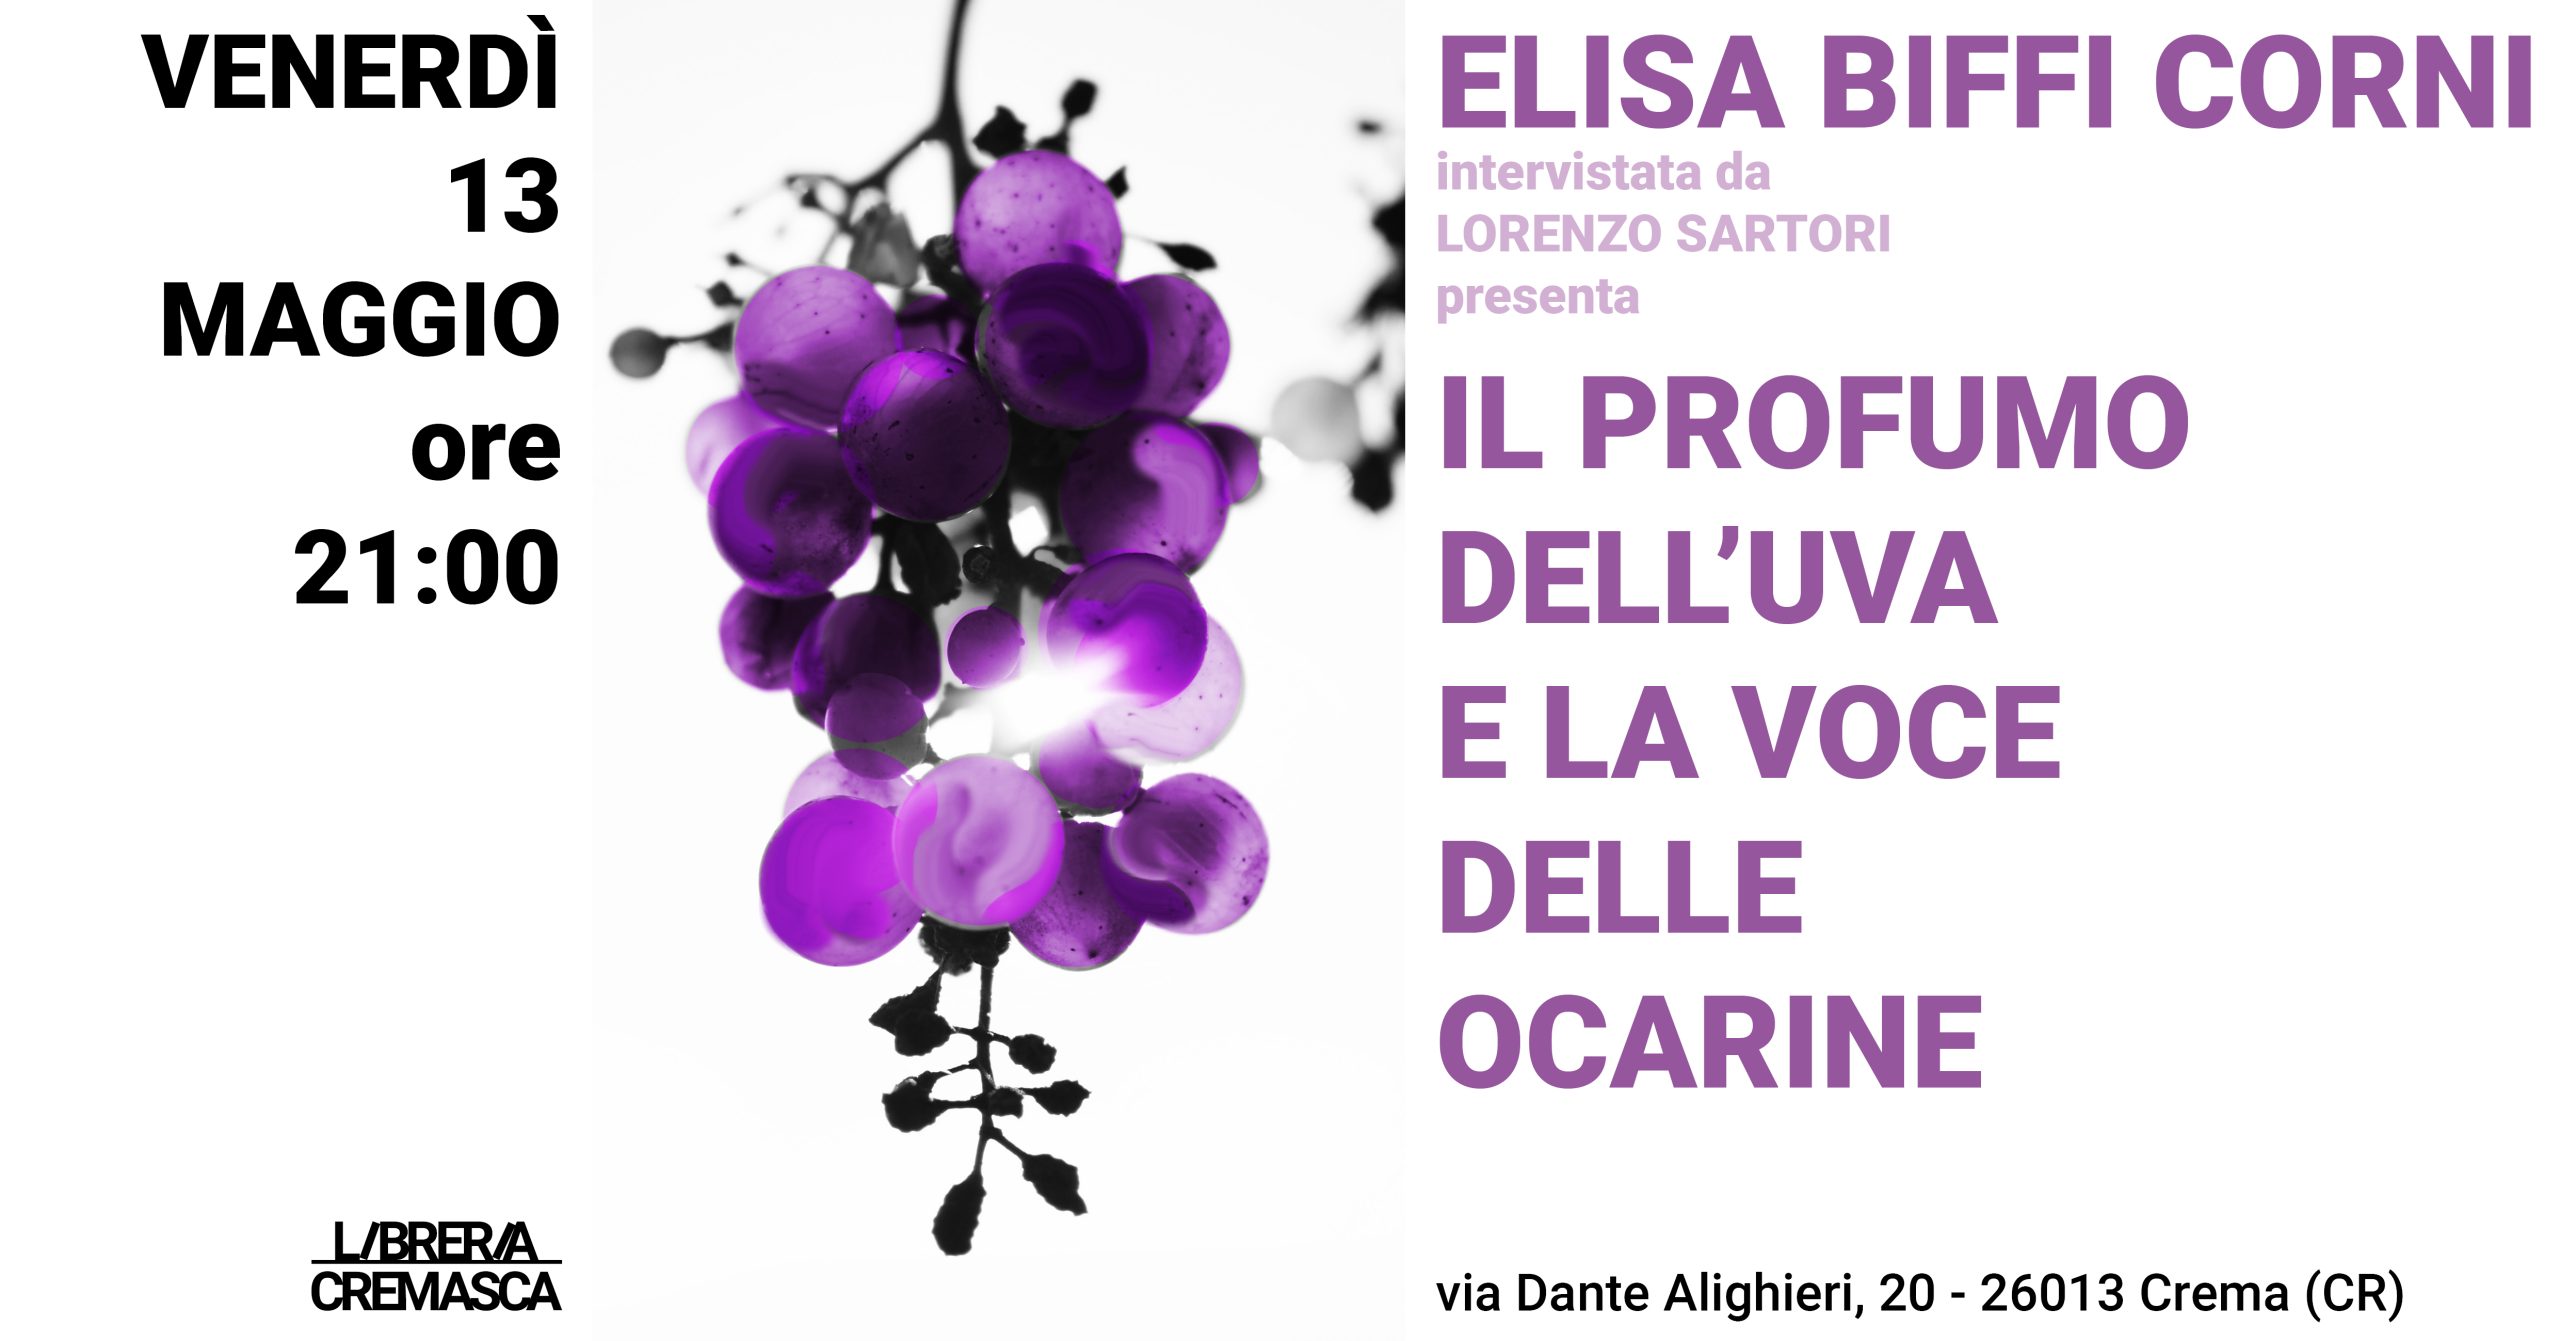 Incontro con l’autrice: Elisa Biffi Corni